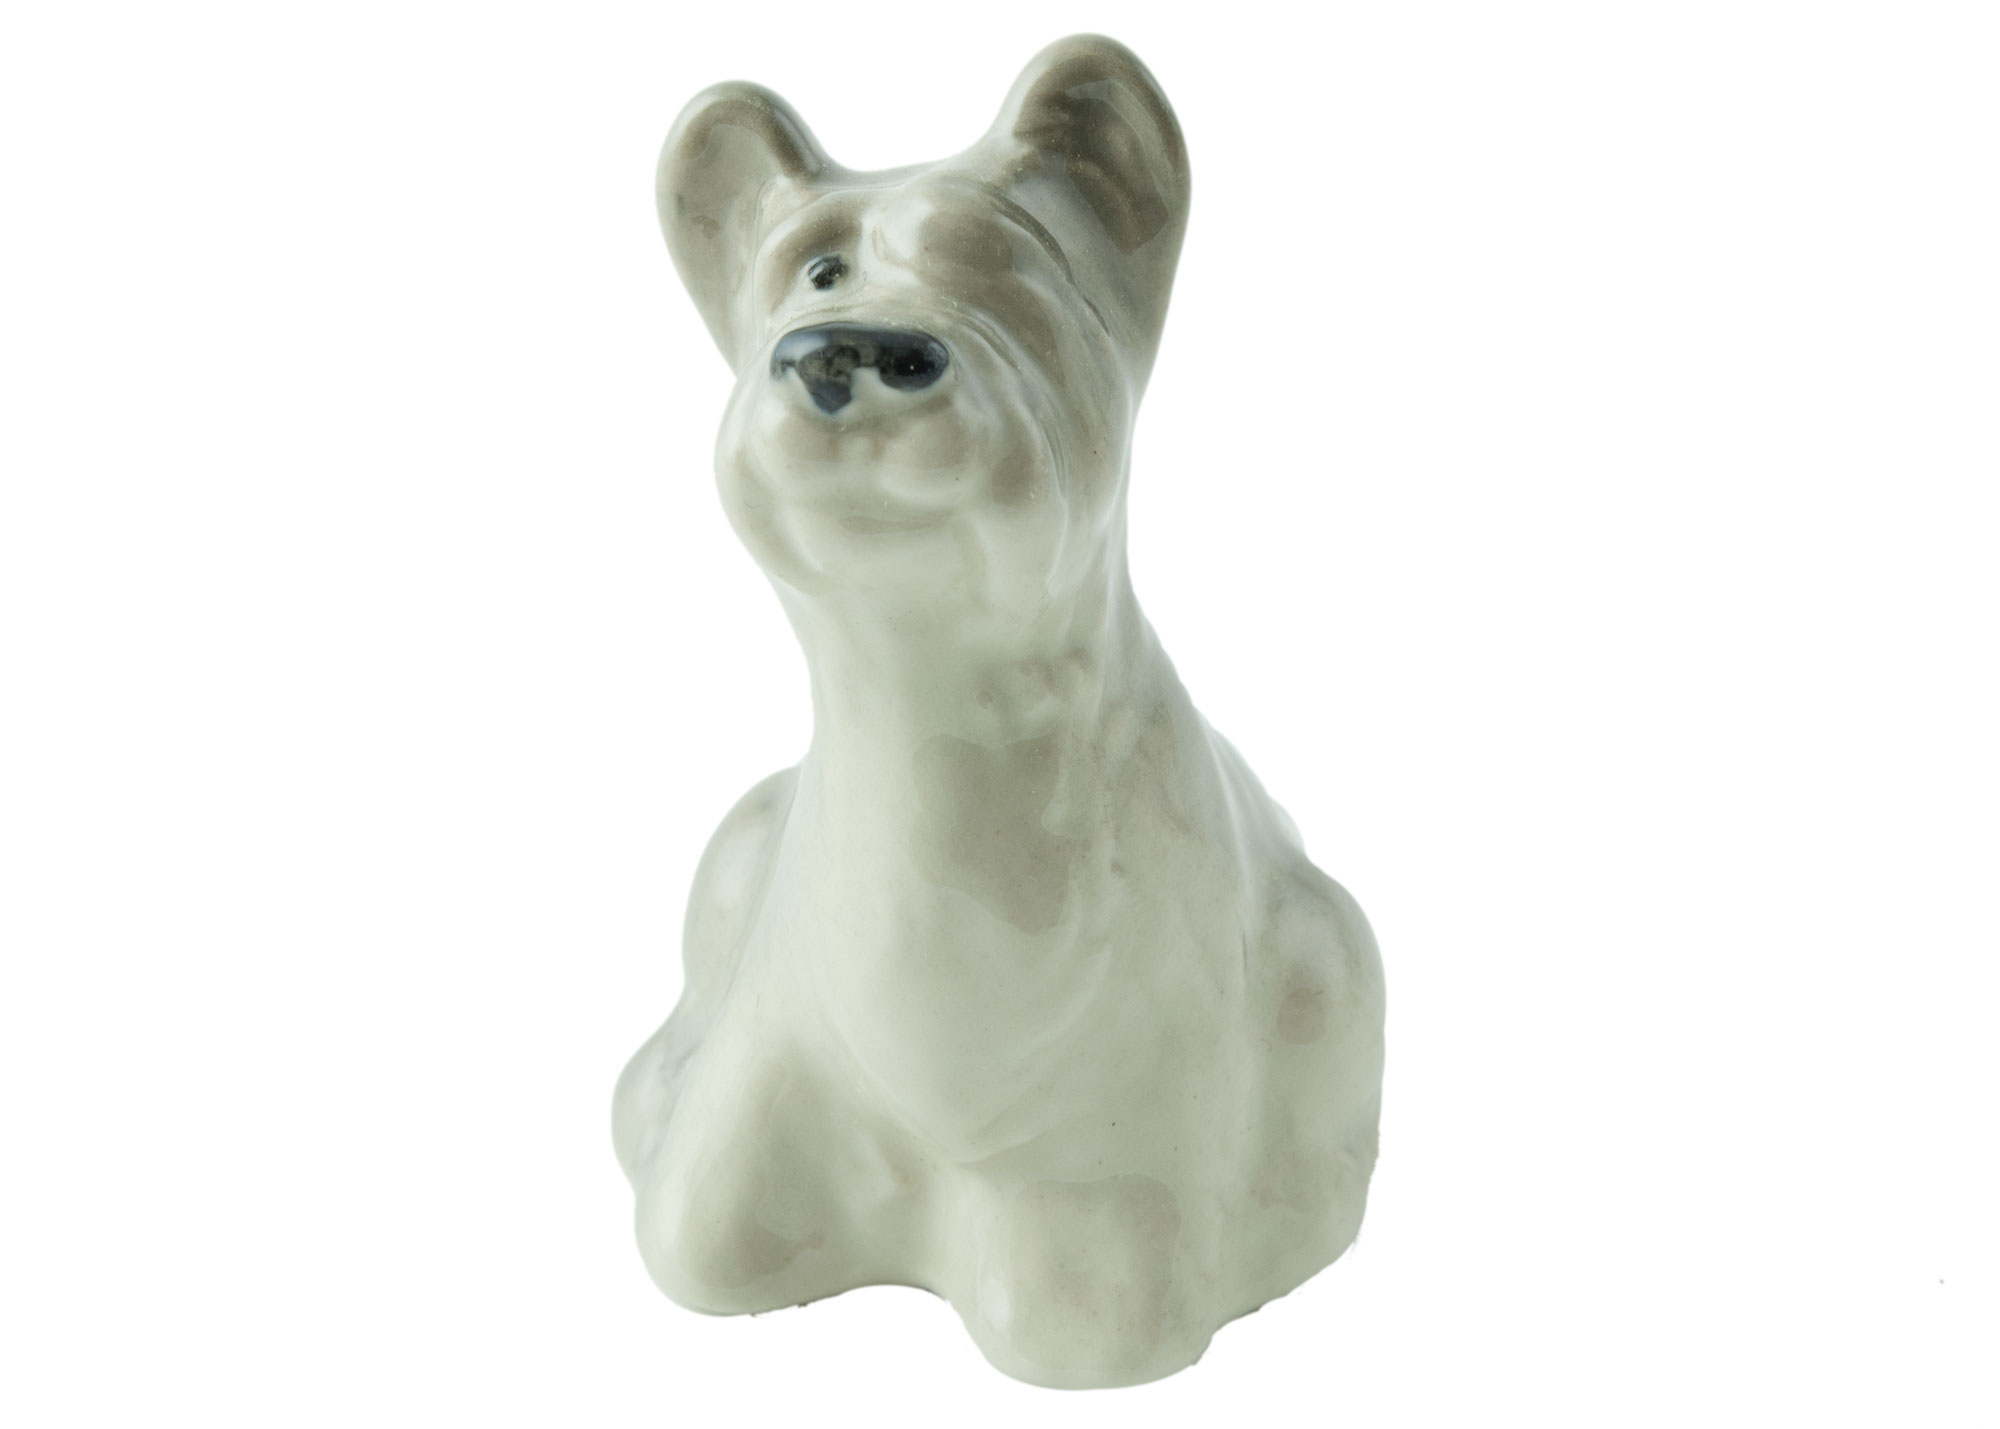 Buy Briard Porcelain Figurine at GoldenCockerel.com